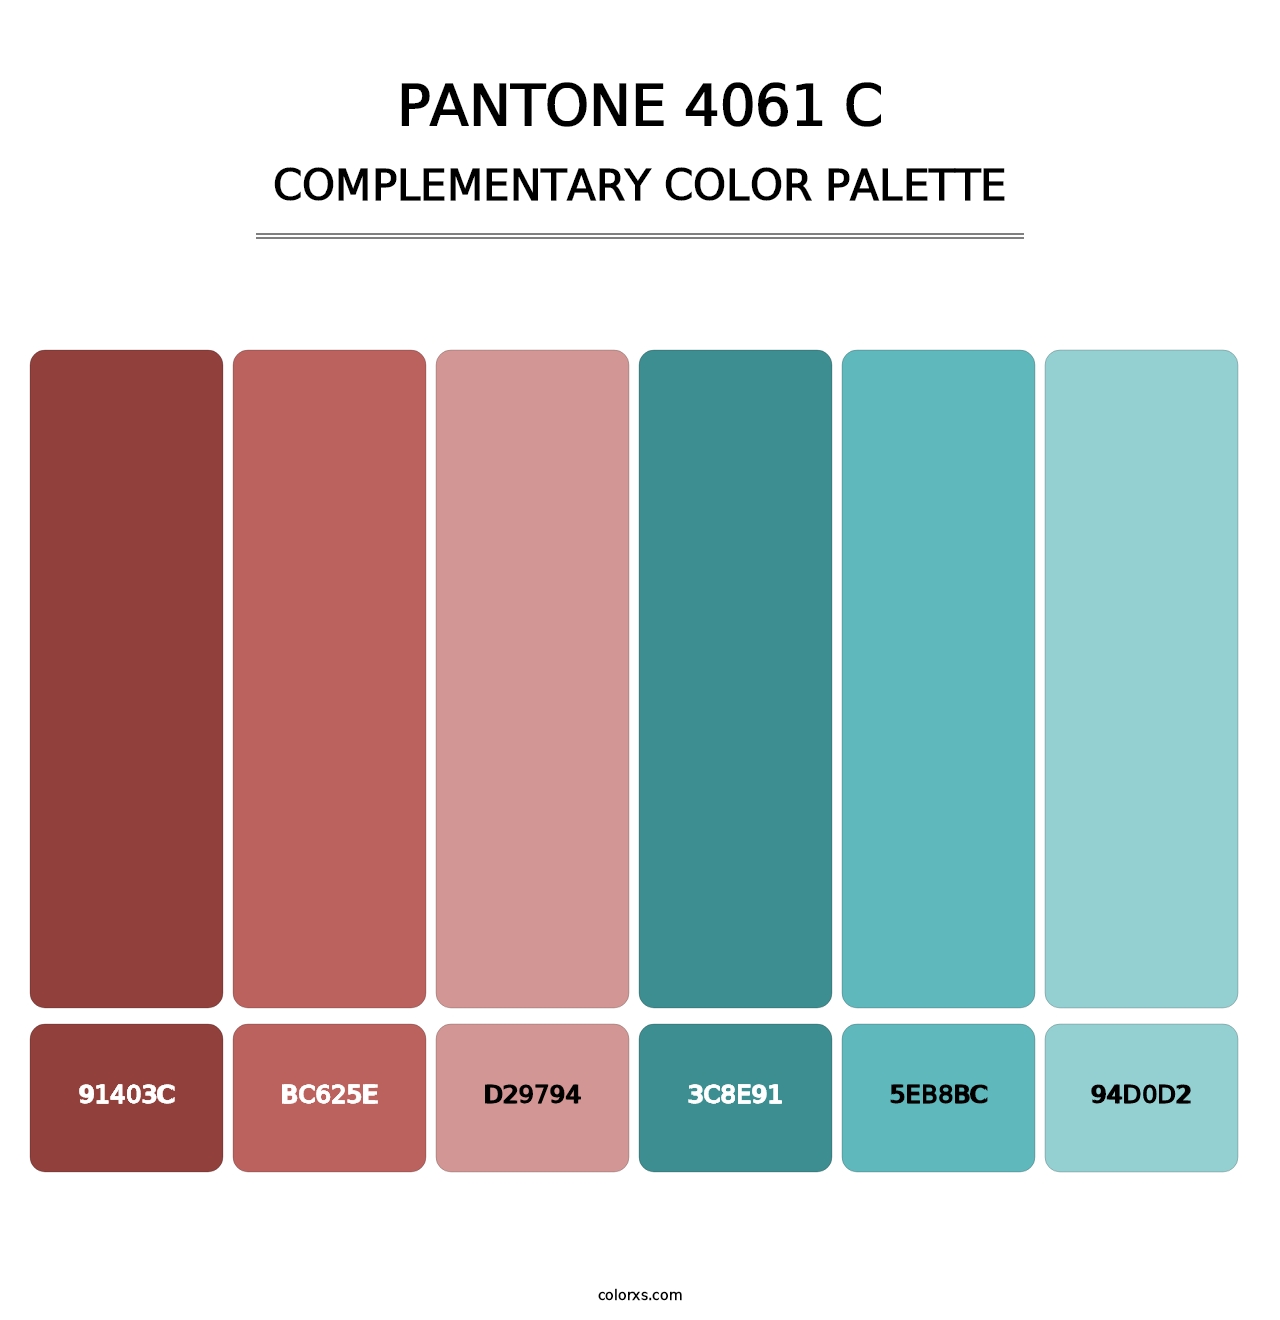 PANTONE 4061 C - Complementary Color Palette